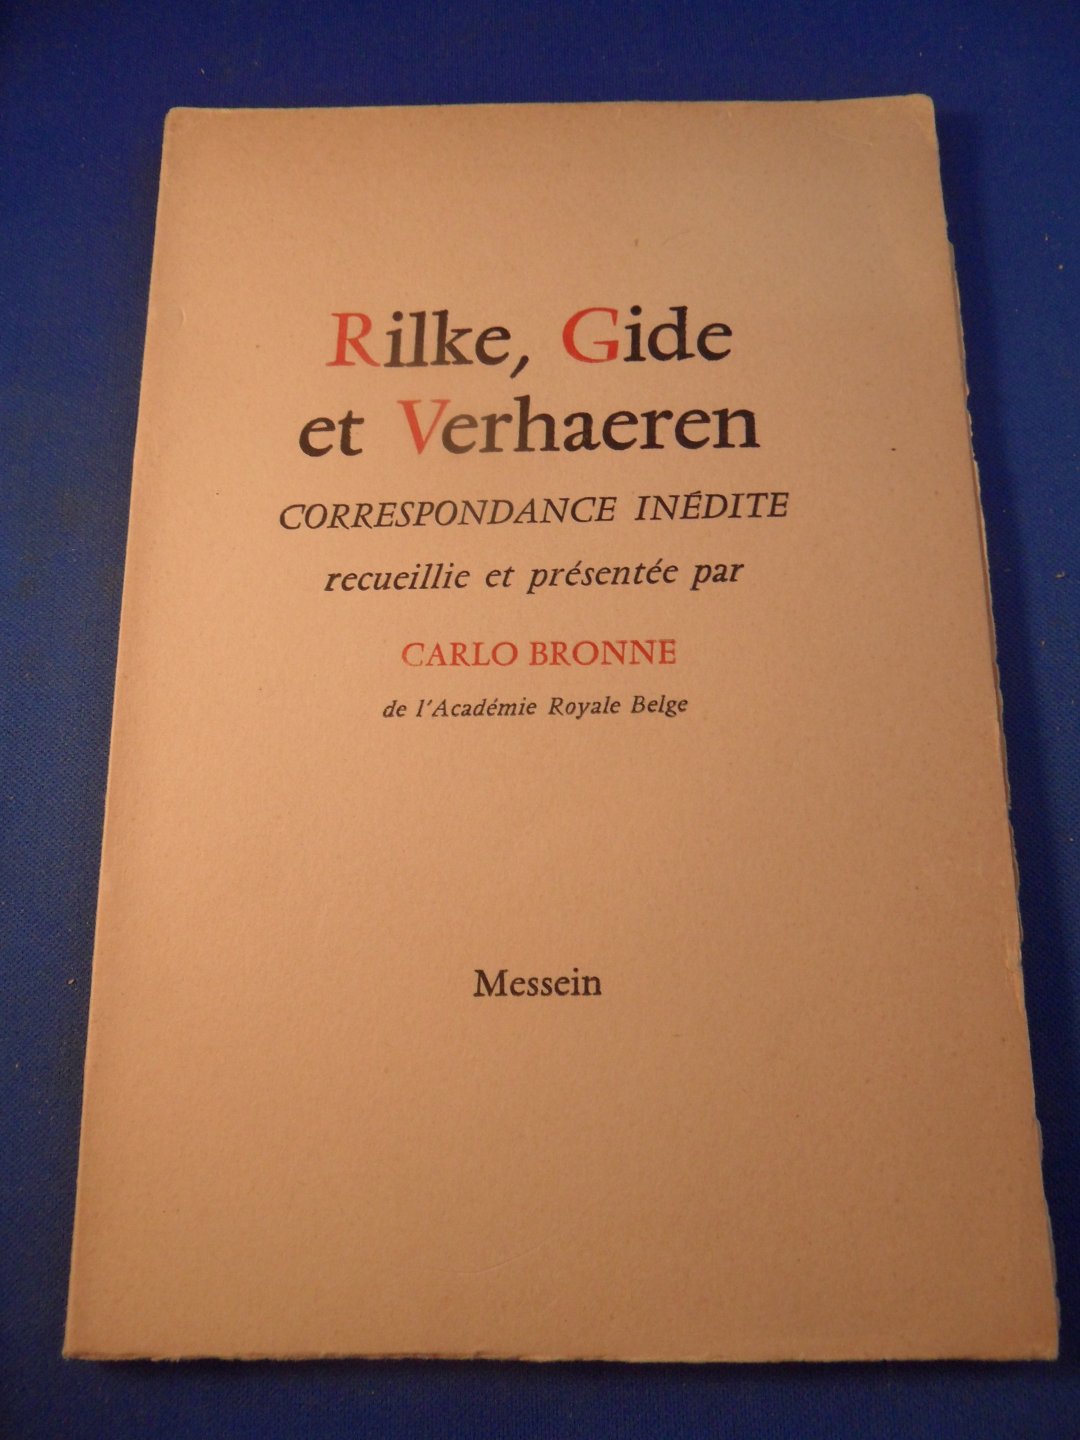 Rilke, Rainer Maria - Rilke, Gide et Verhaeren Correspondance inédite recueillie et présentée par Carlo Bronne